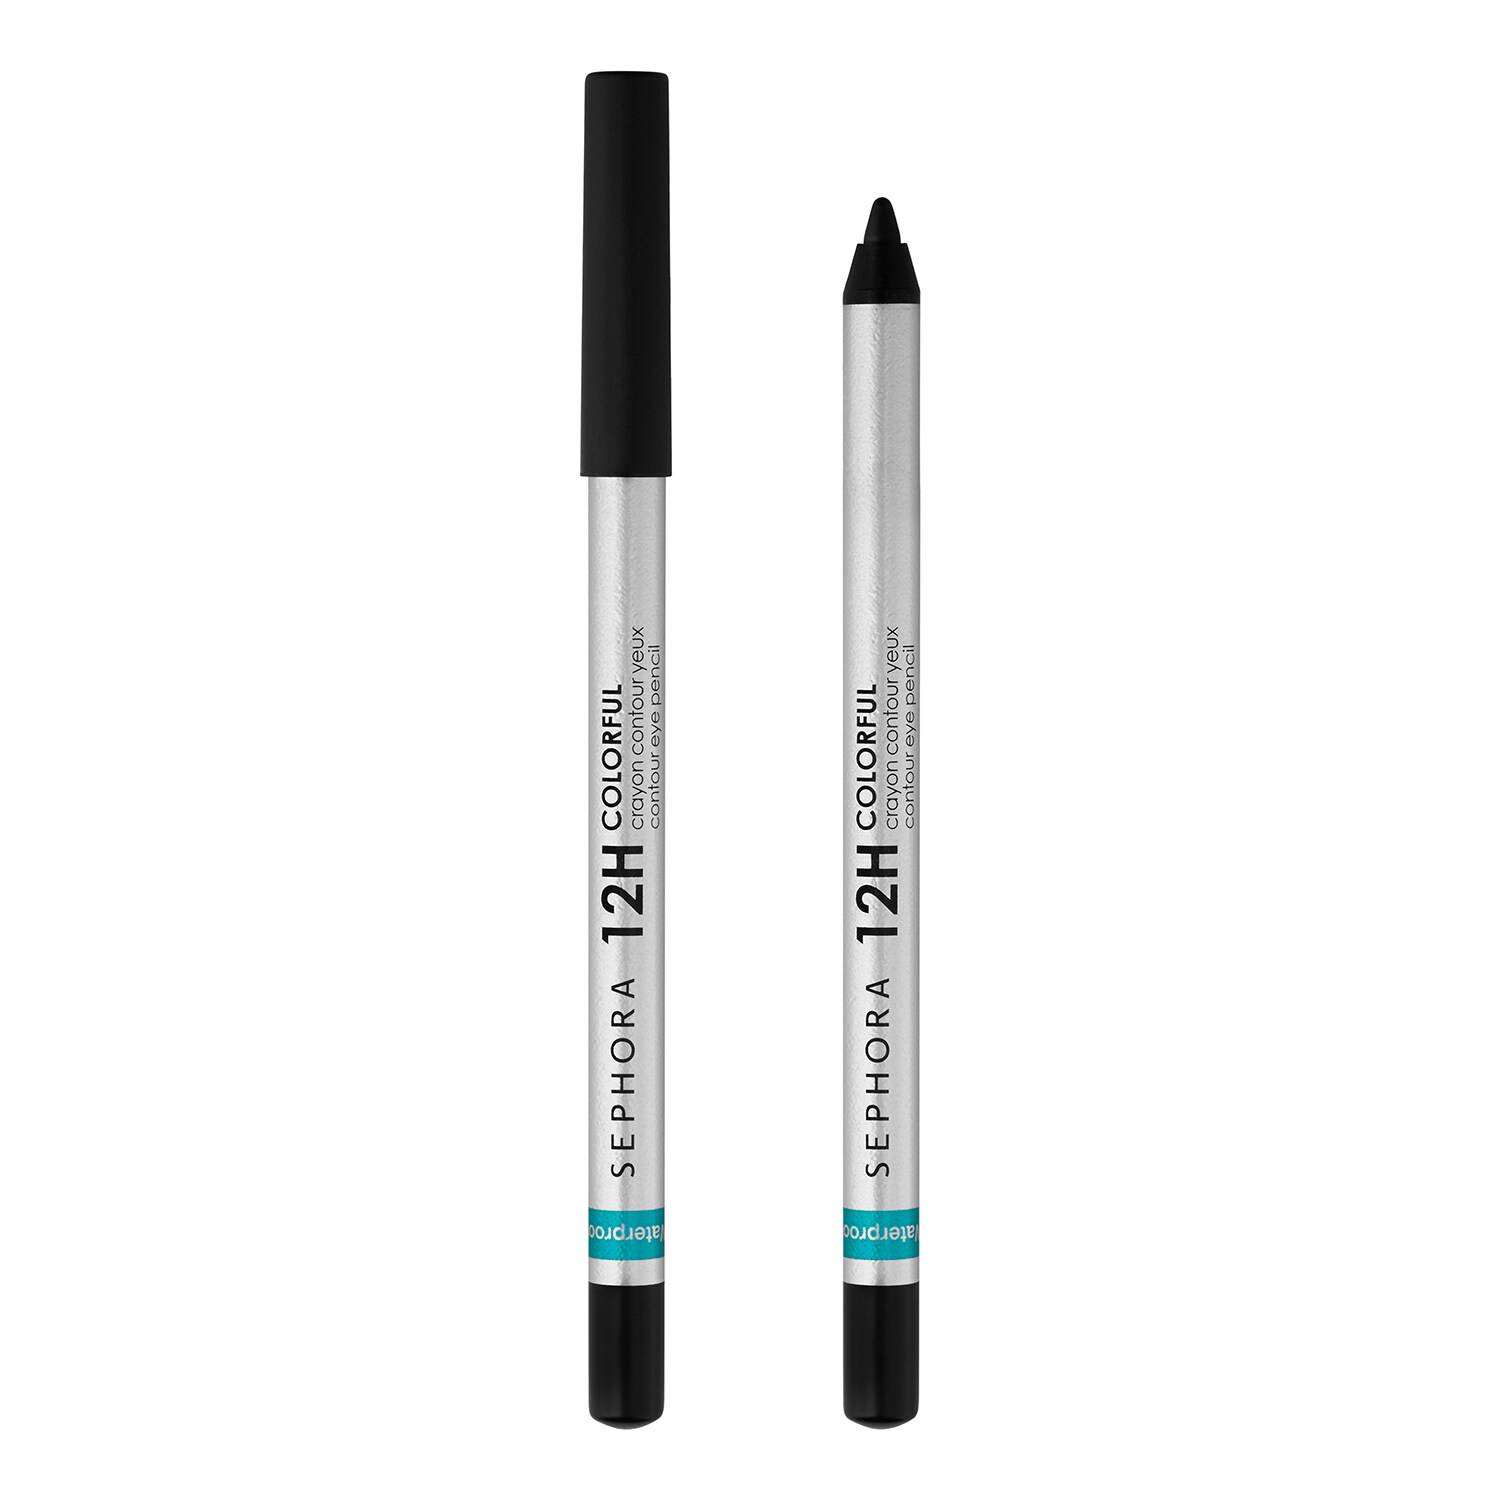 Sephora Collection 12H Coloful Contour Eye Pencil 1G 01 Black Lace - Matte